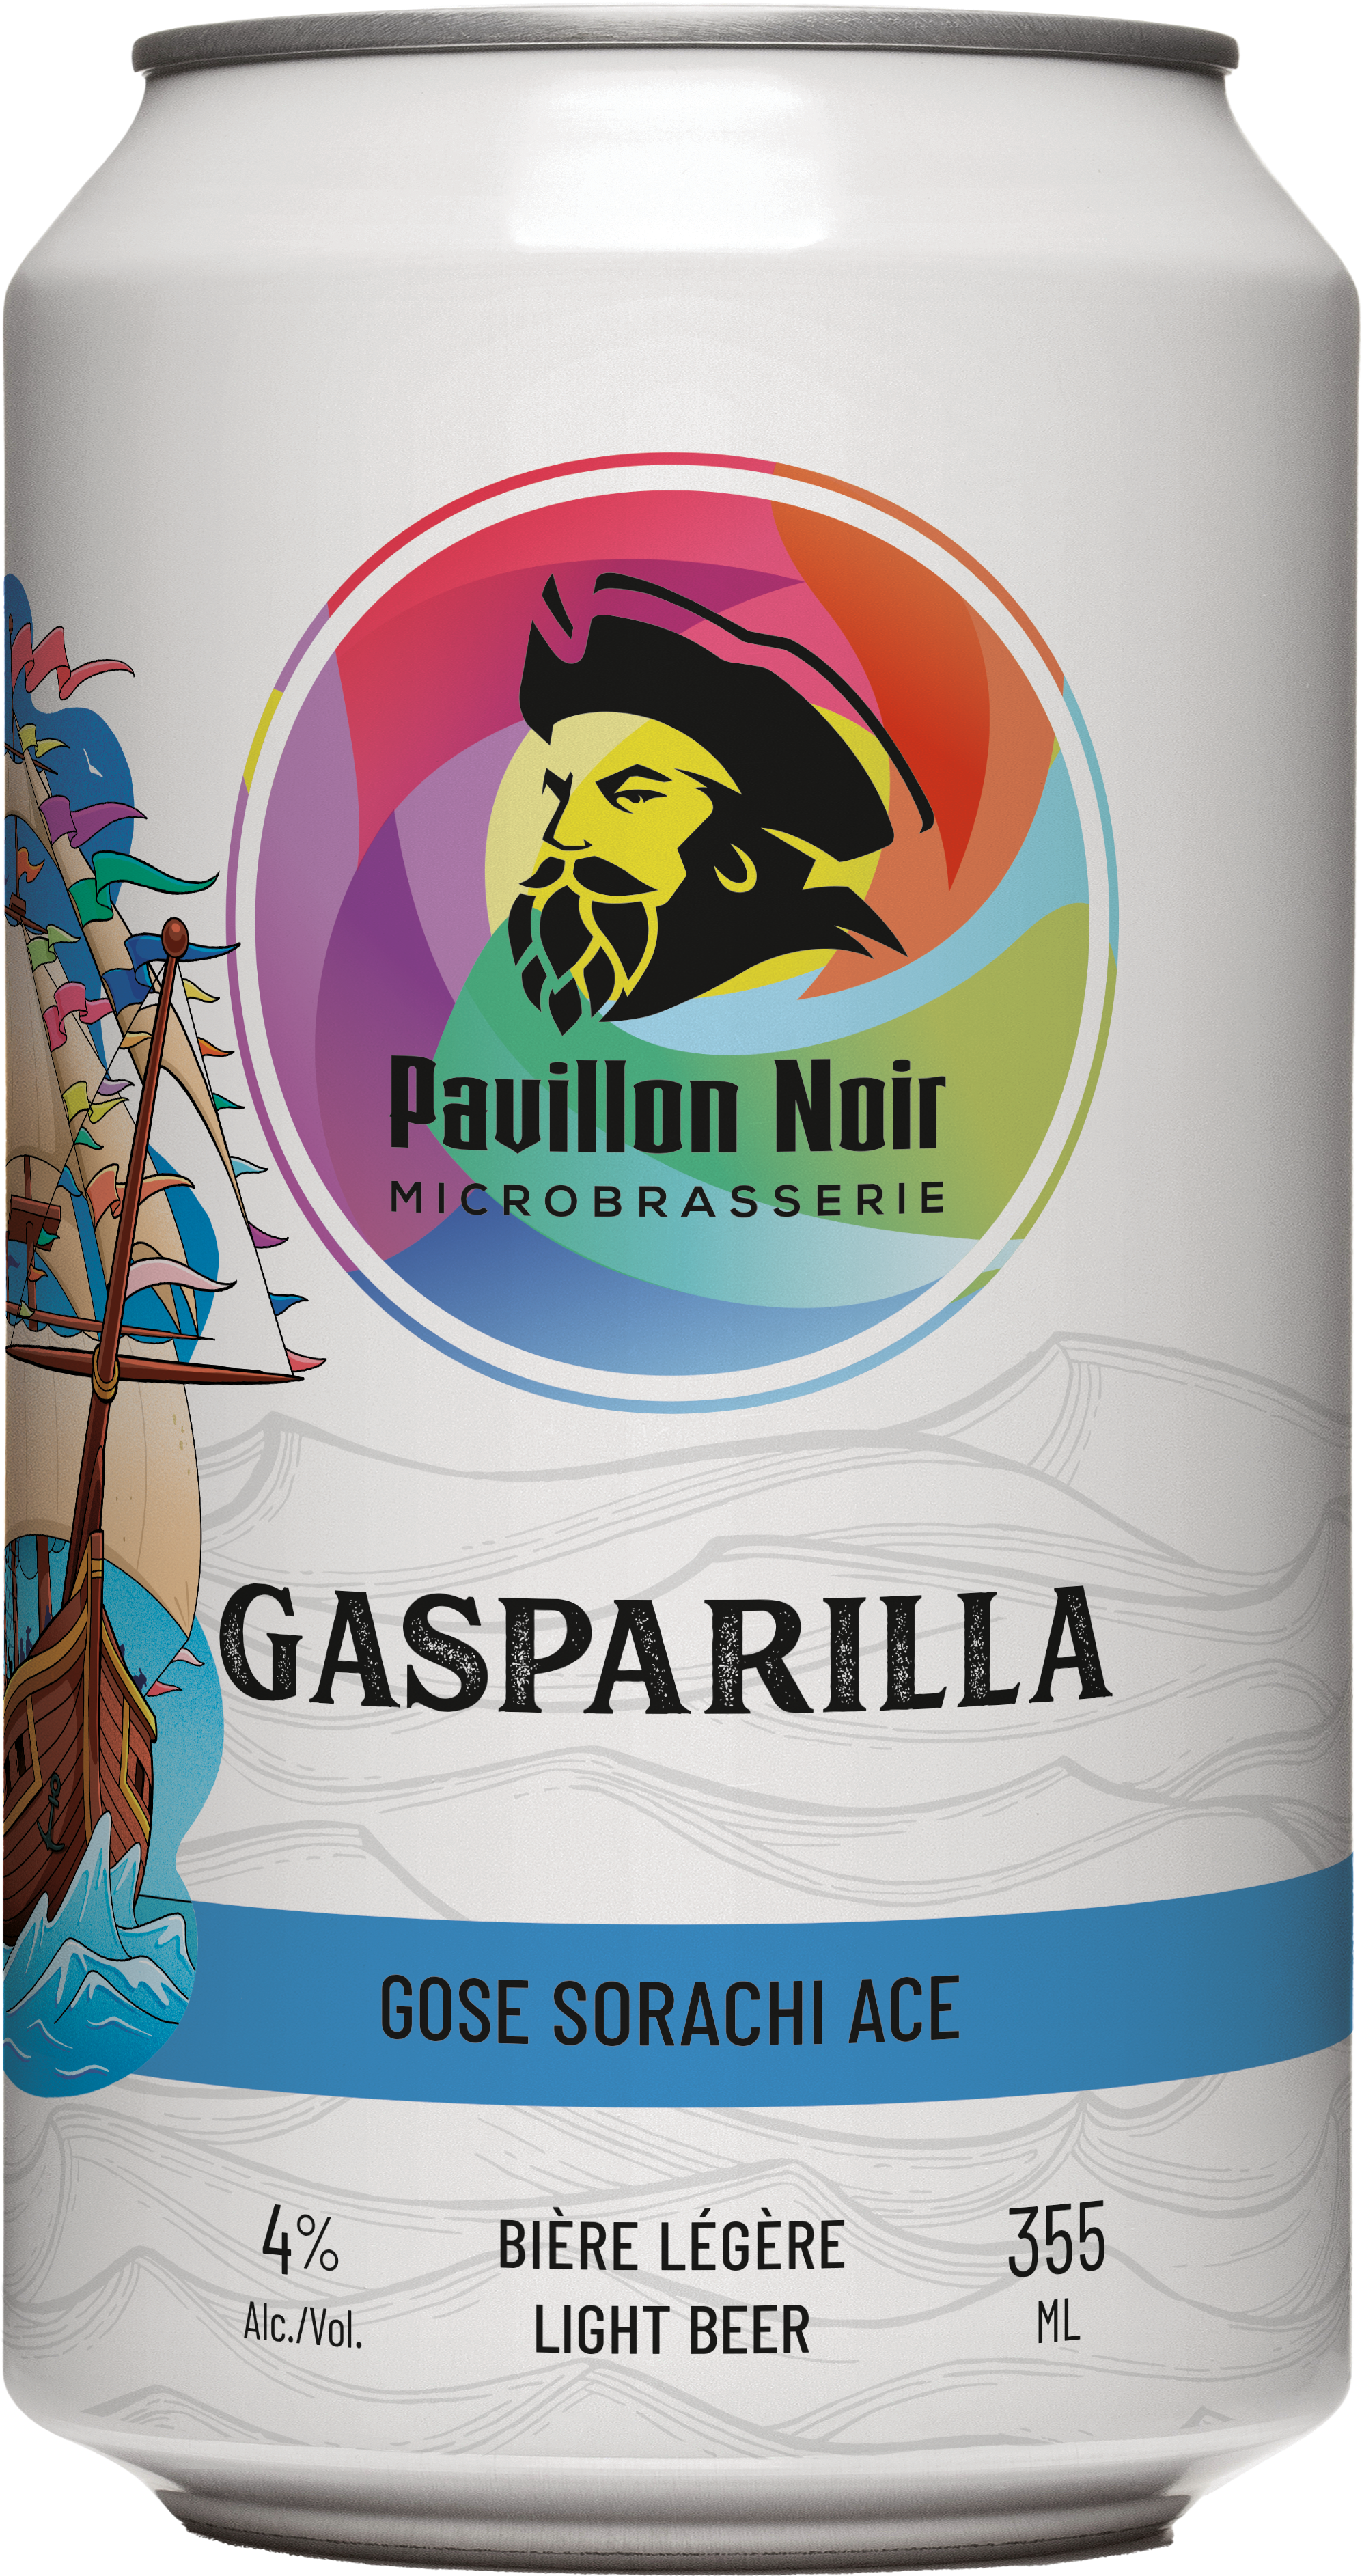 Gasparilla - Microbrasserie du Pavillon Noir